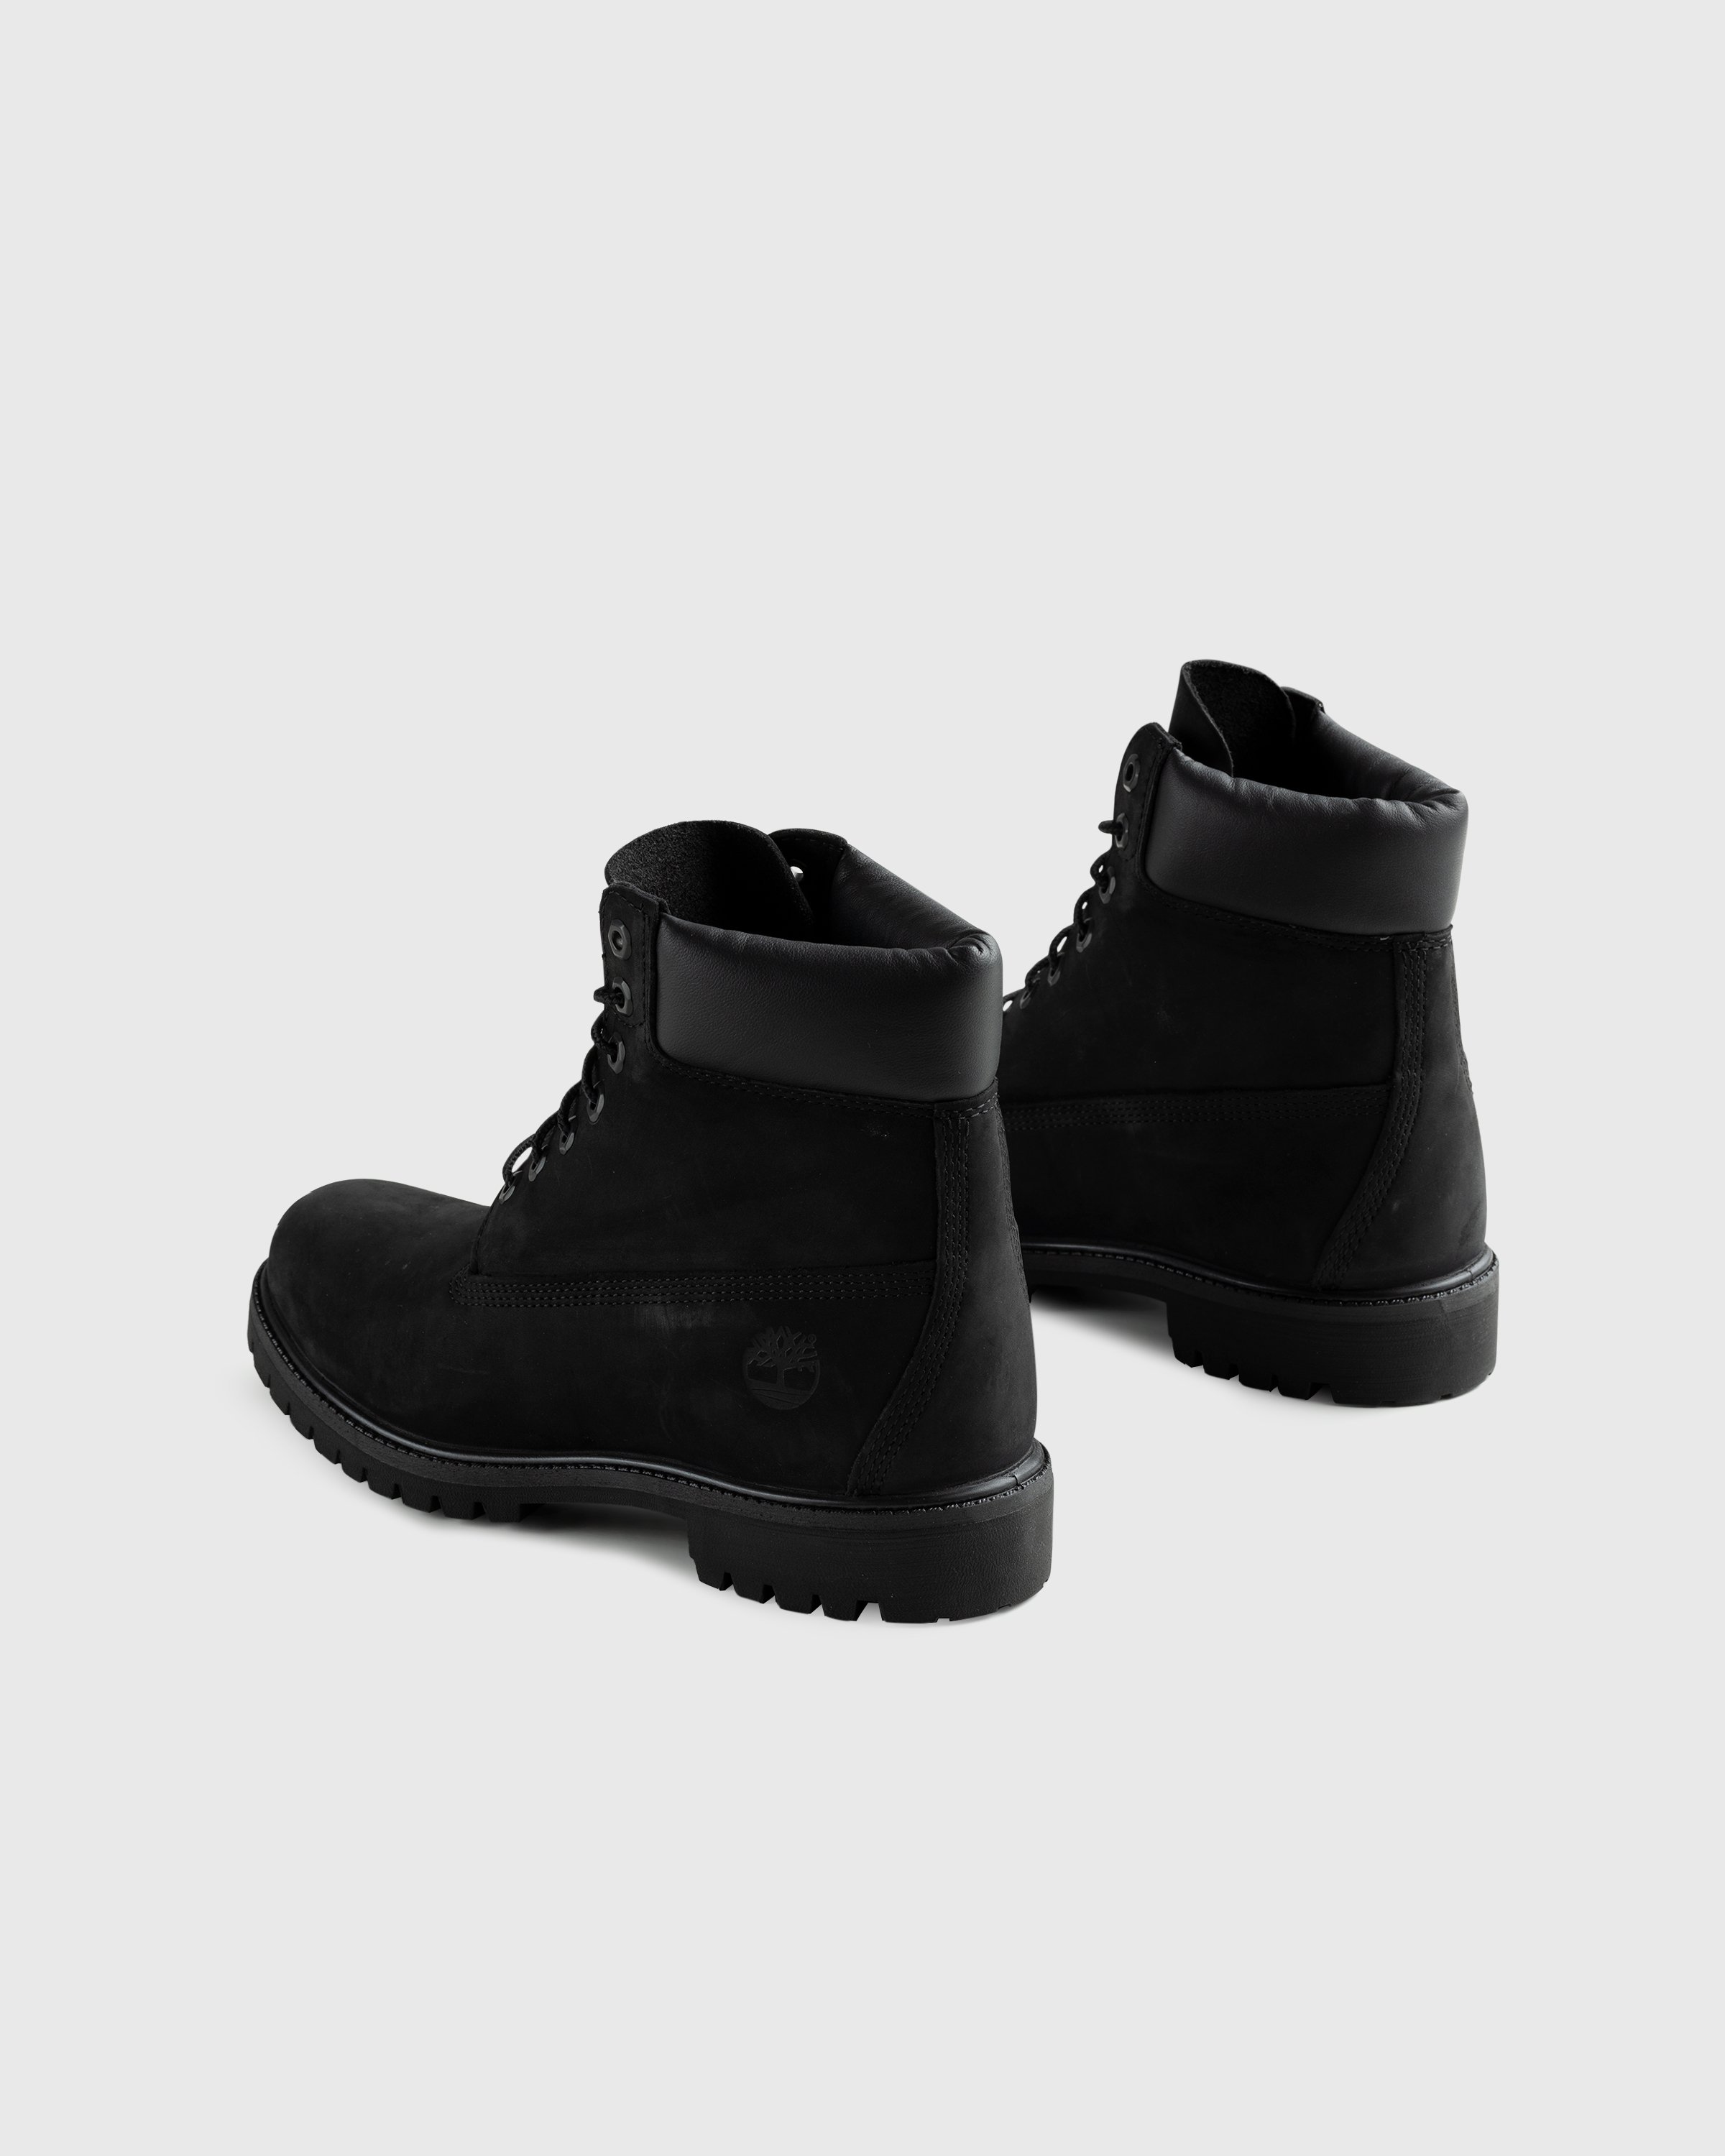 Timberland - 6 Inch Premium Boot Black - Footwear - Black - Image 4